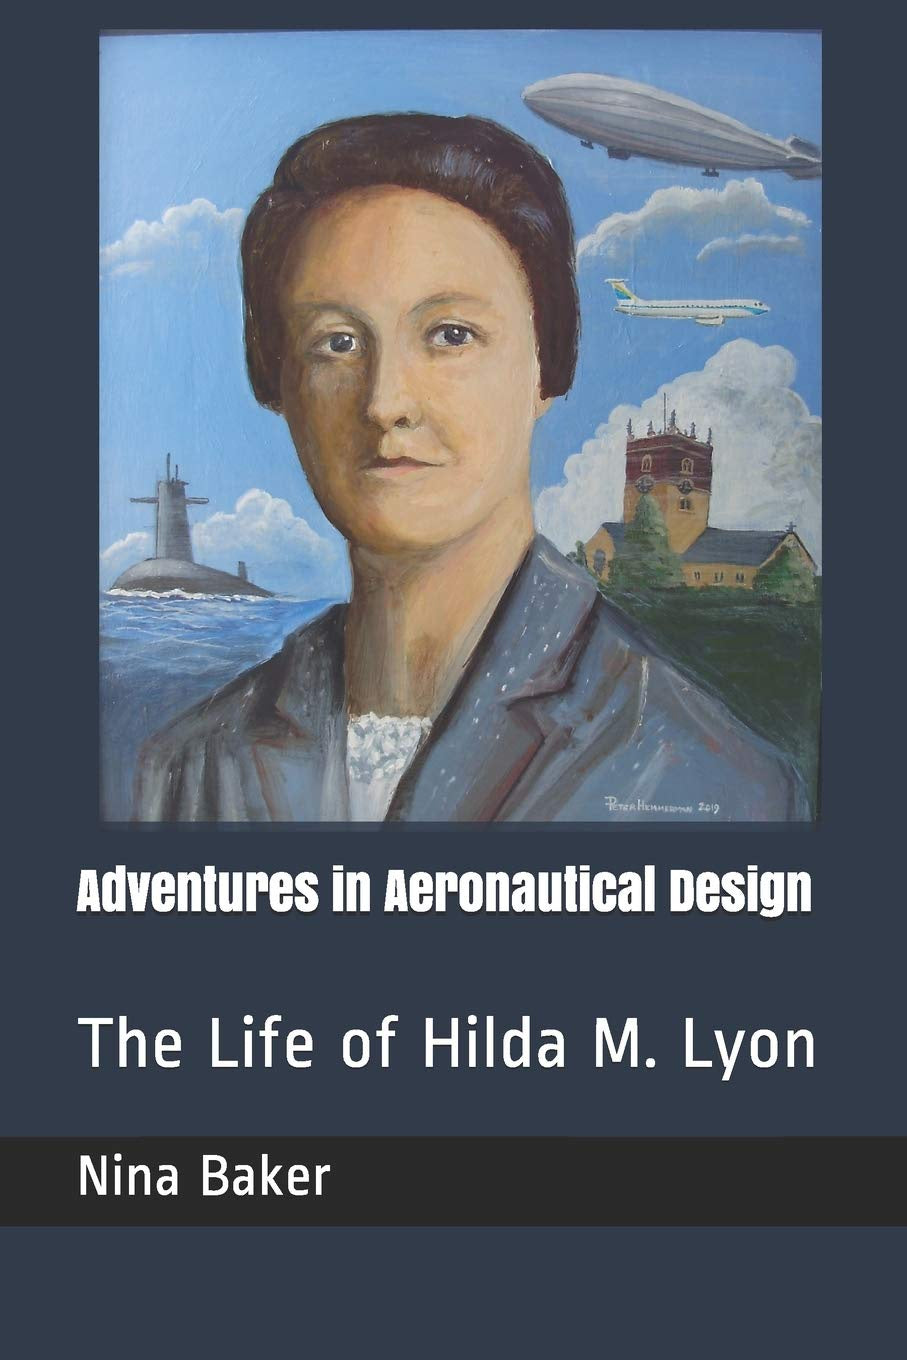 The Life of Hilda M. Lyon